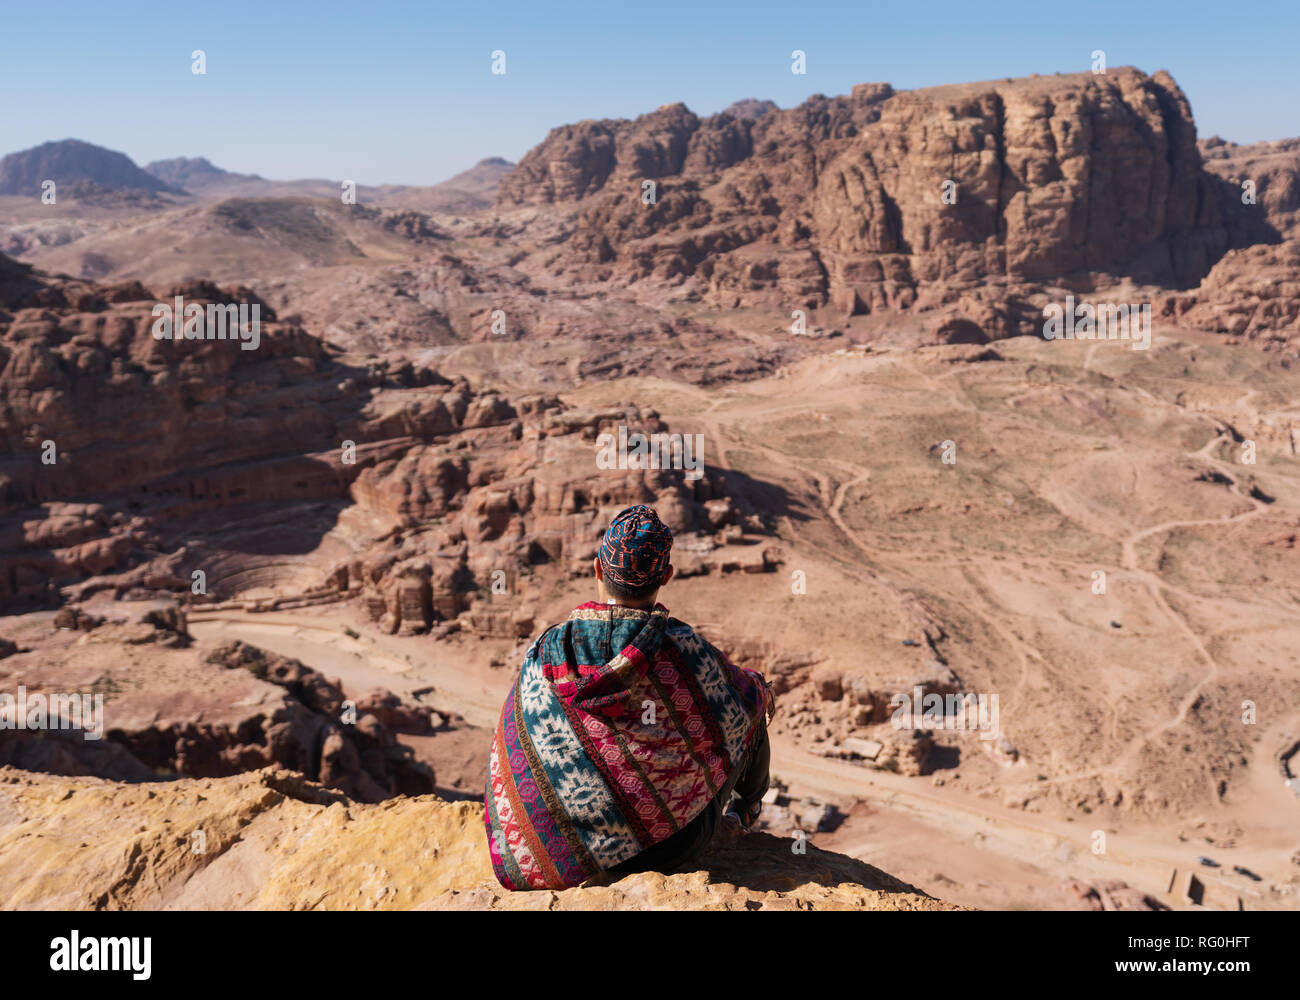 Traveler sitting on edge of mountain cliff, at Wadi Rum desert in Jordan. Travel lifestyle and adventure and journey Stock Photo